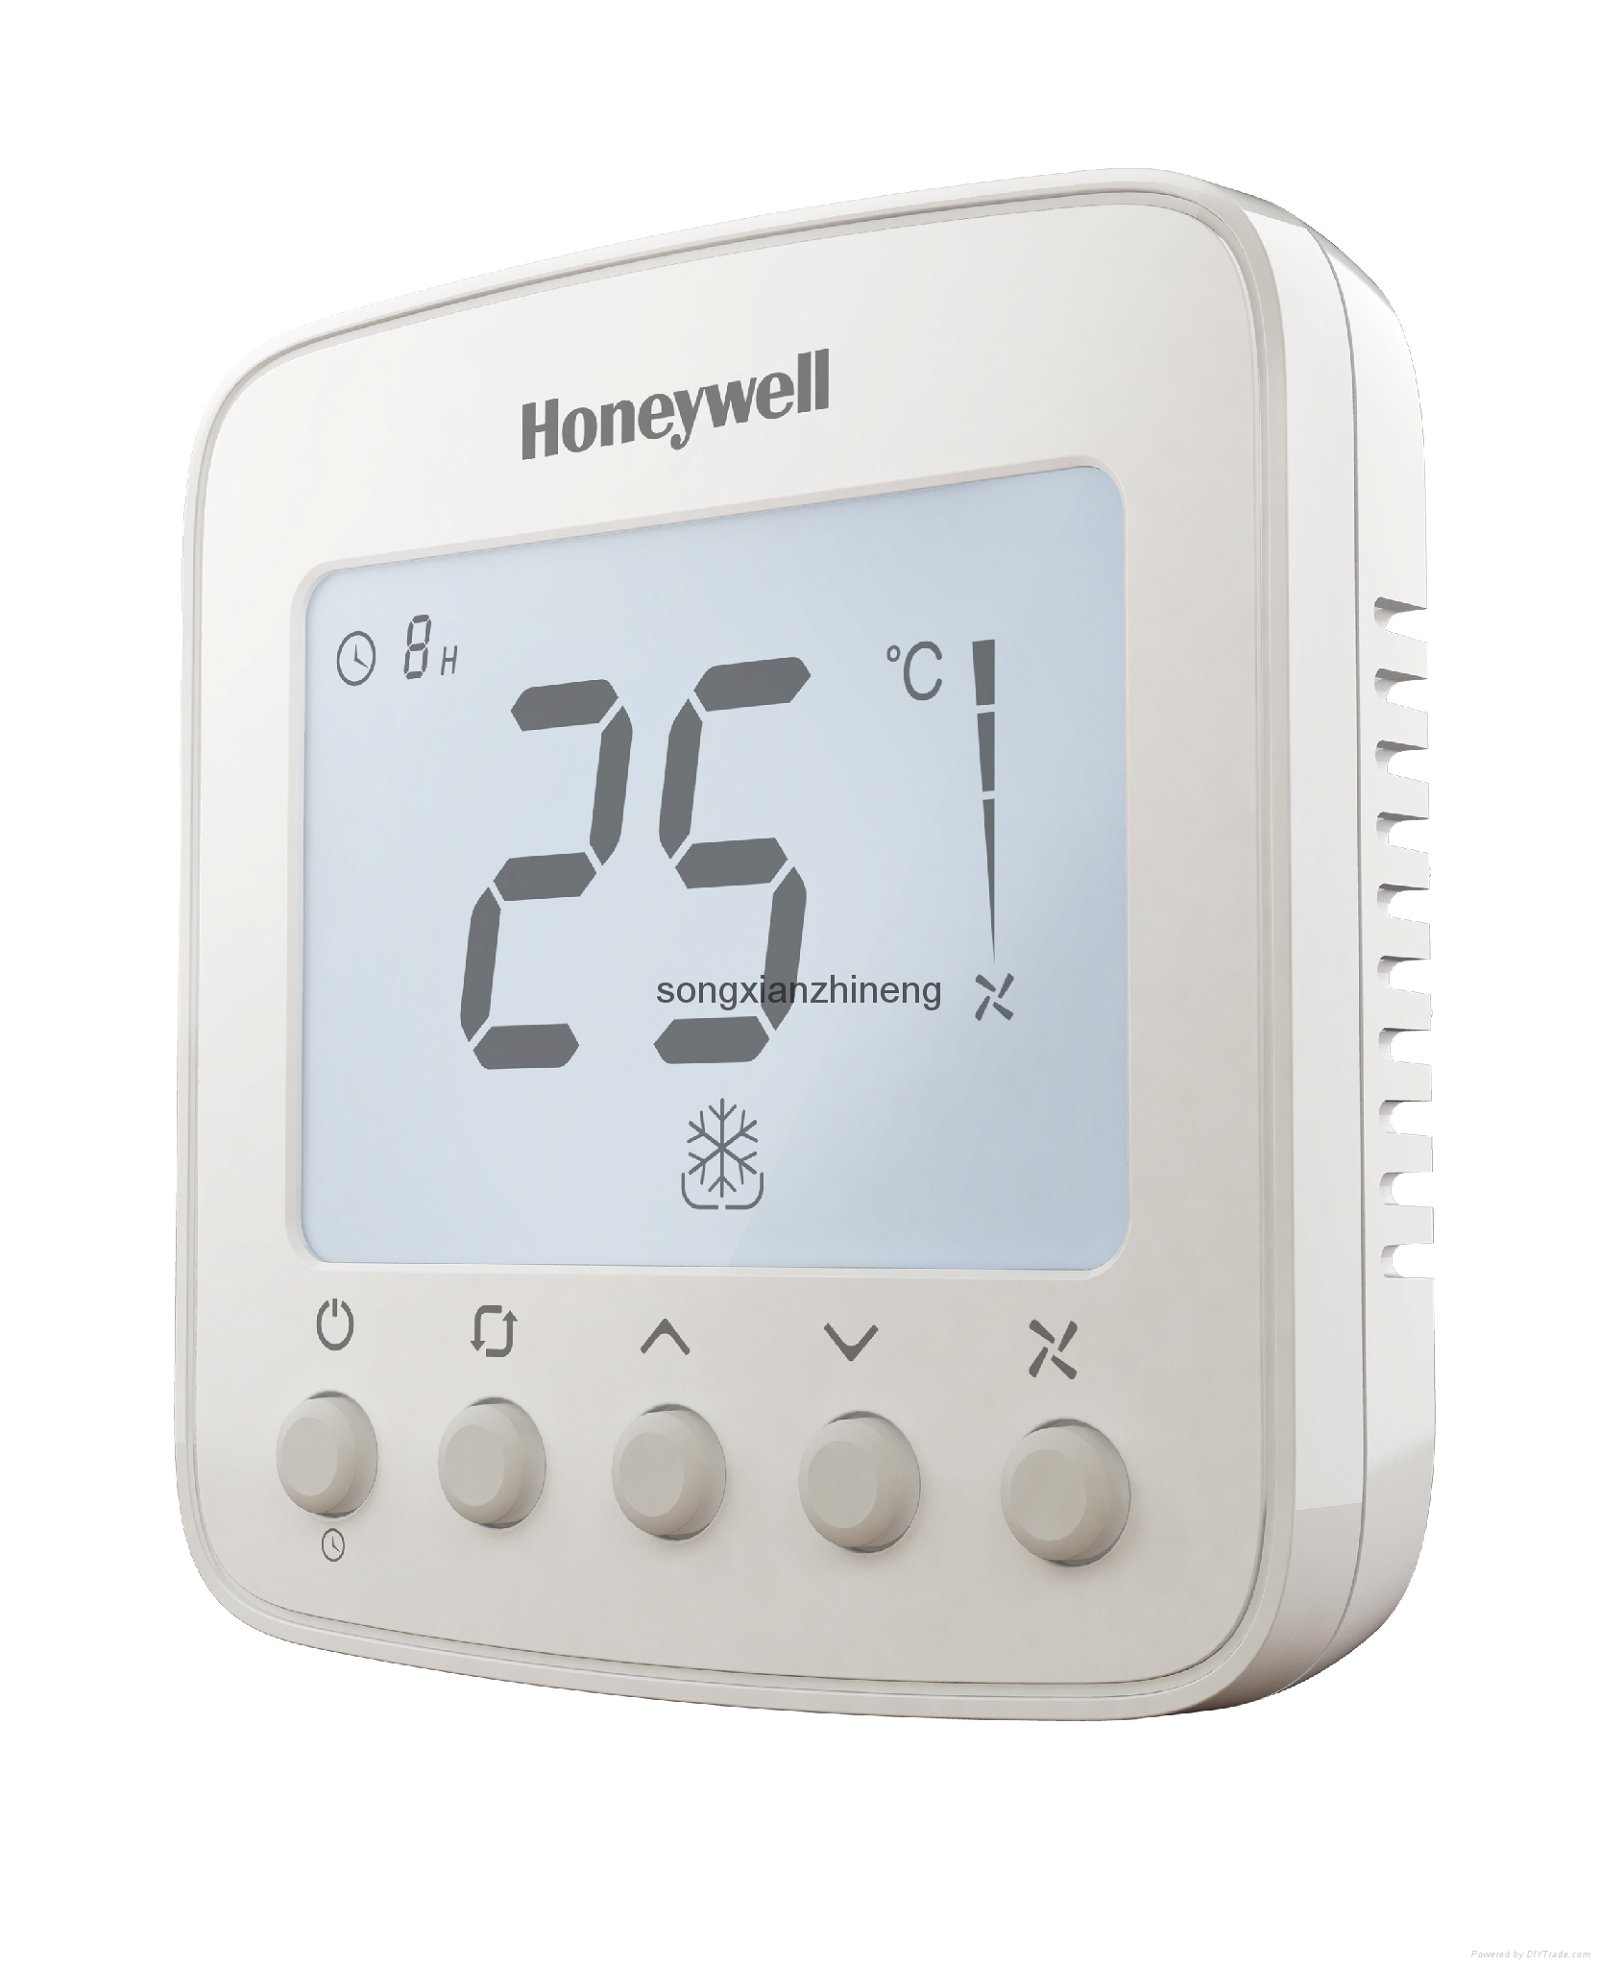 Honeywell TF228WN digital thermostat 3